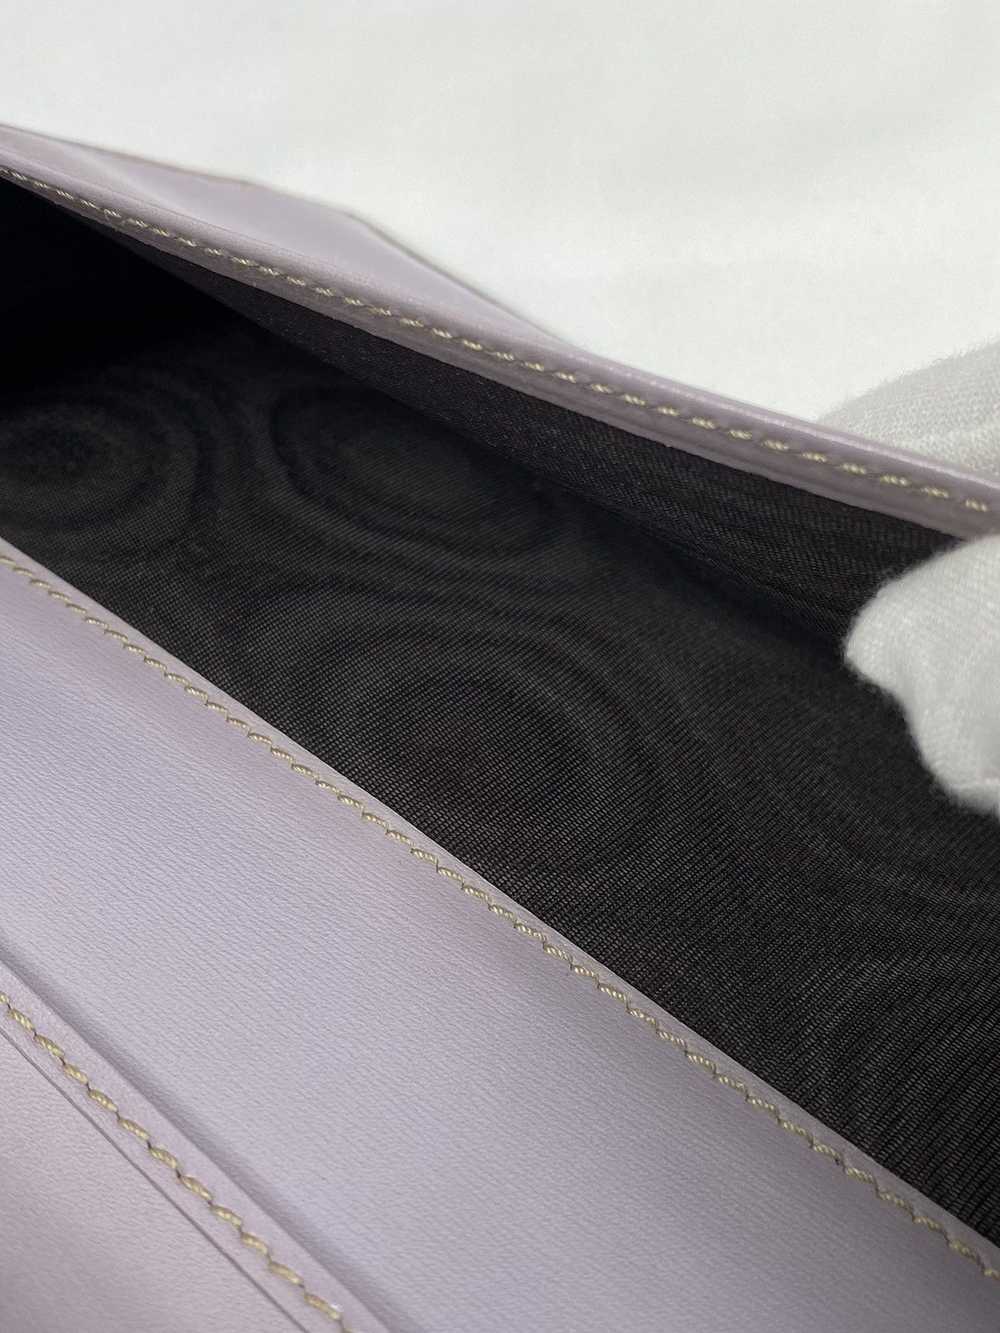 Gucci Gucci GG Guccissima leather trifold wallet - image 8